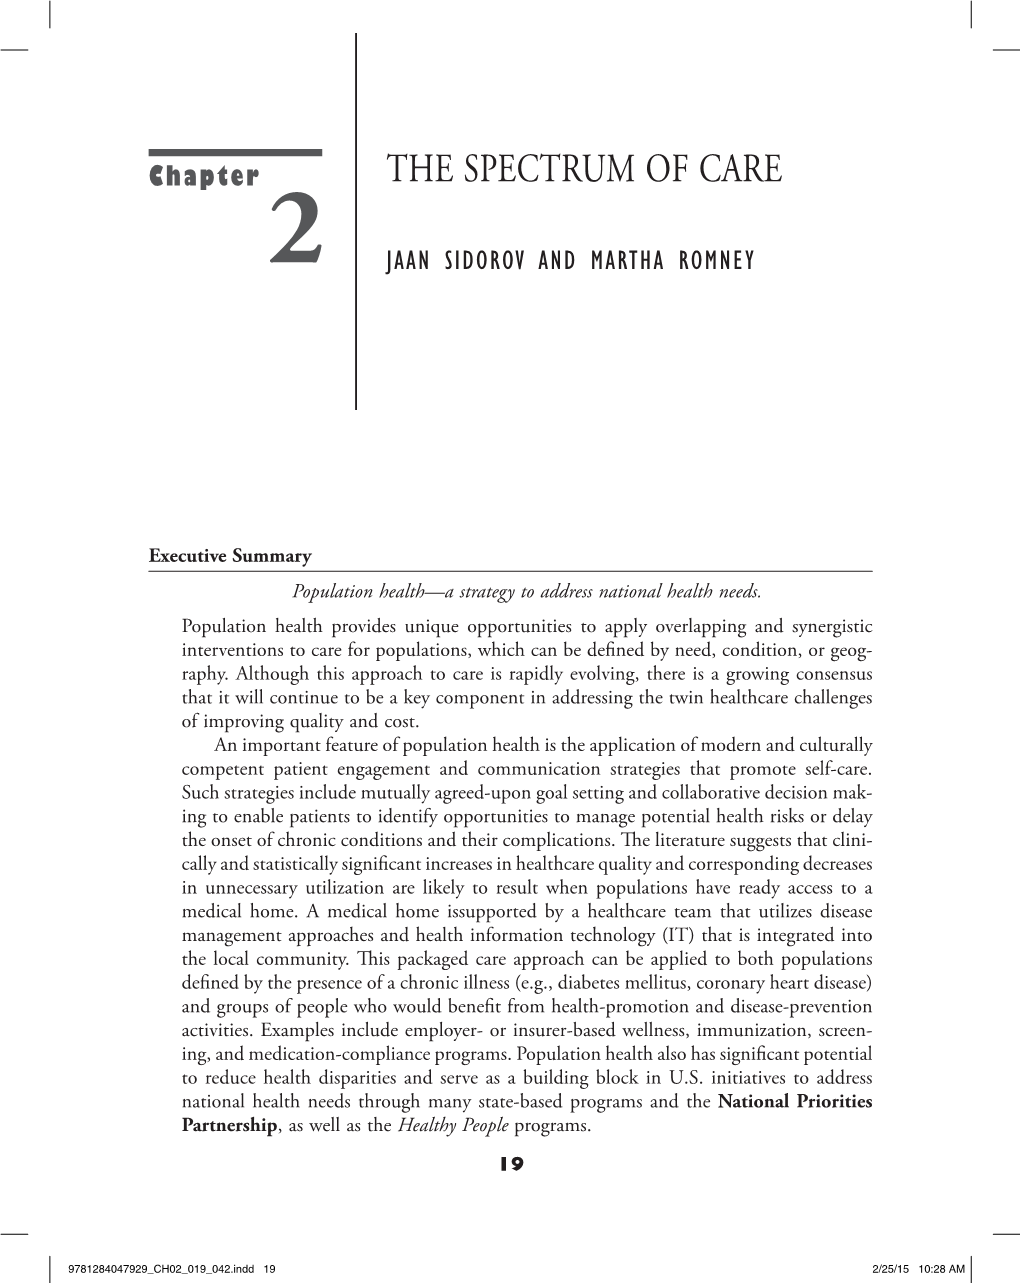 The Spectrum of Care